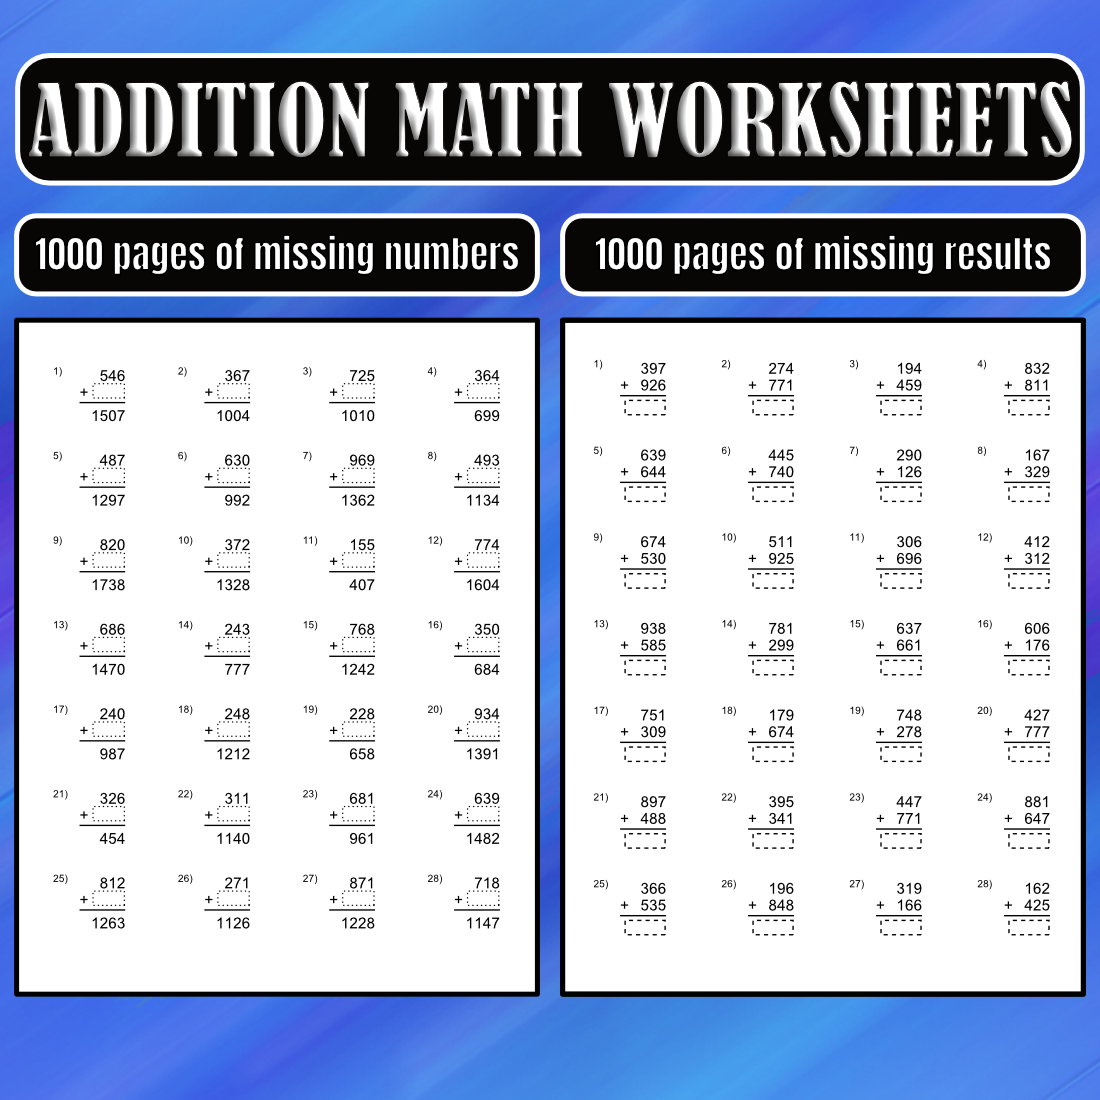 Addition Math Worksheets (KDP Interior) cover image.